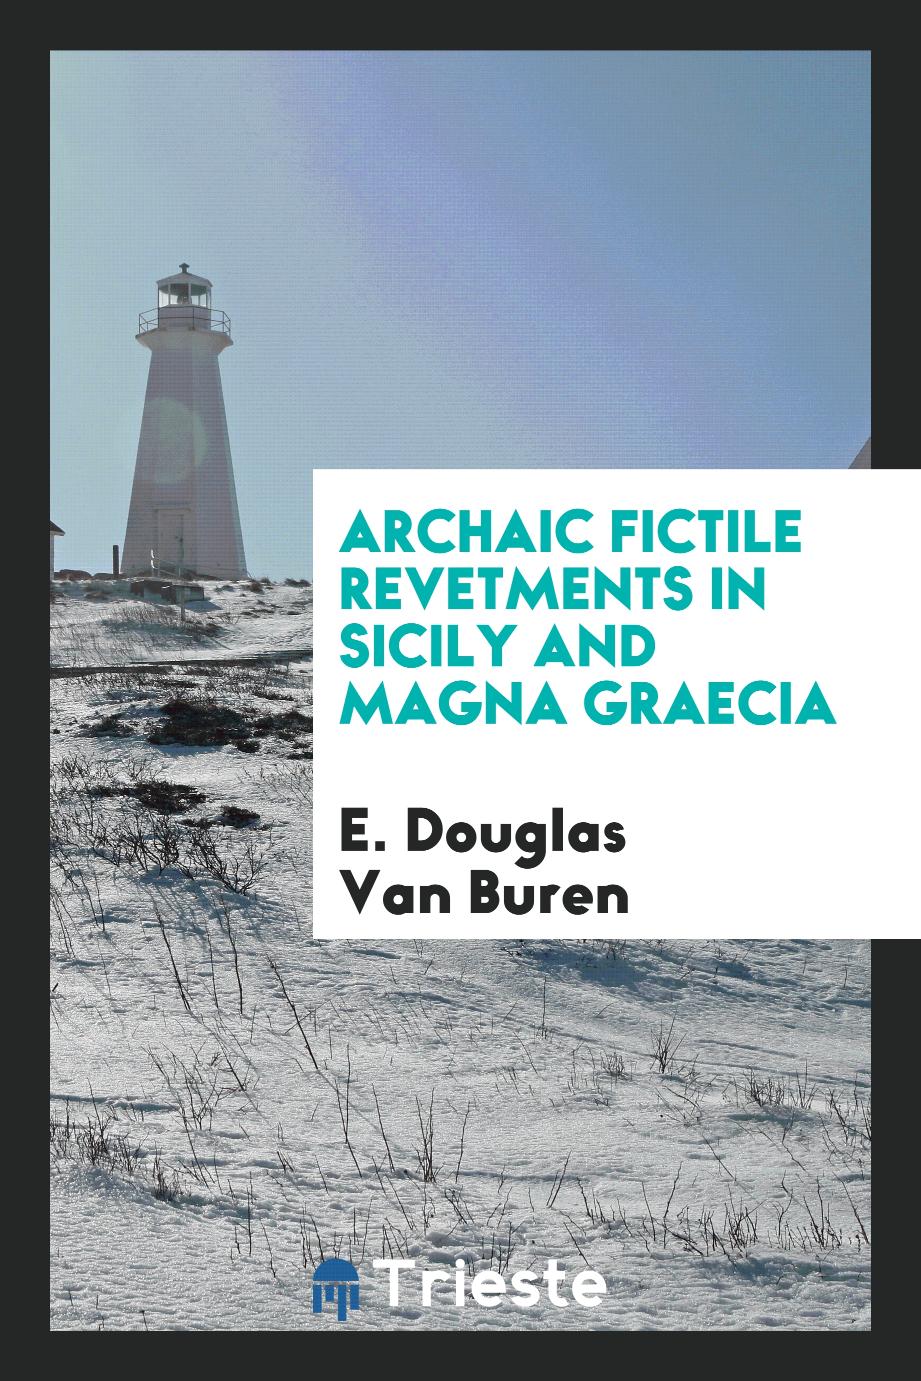 Archaic fictile revetments in Sicily and Magna Graecia